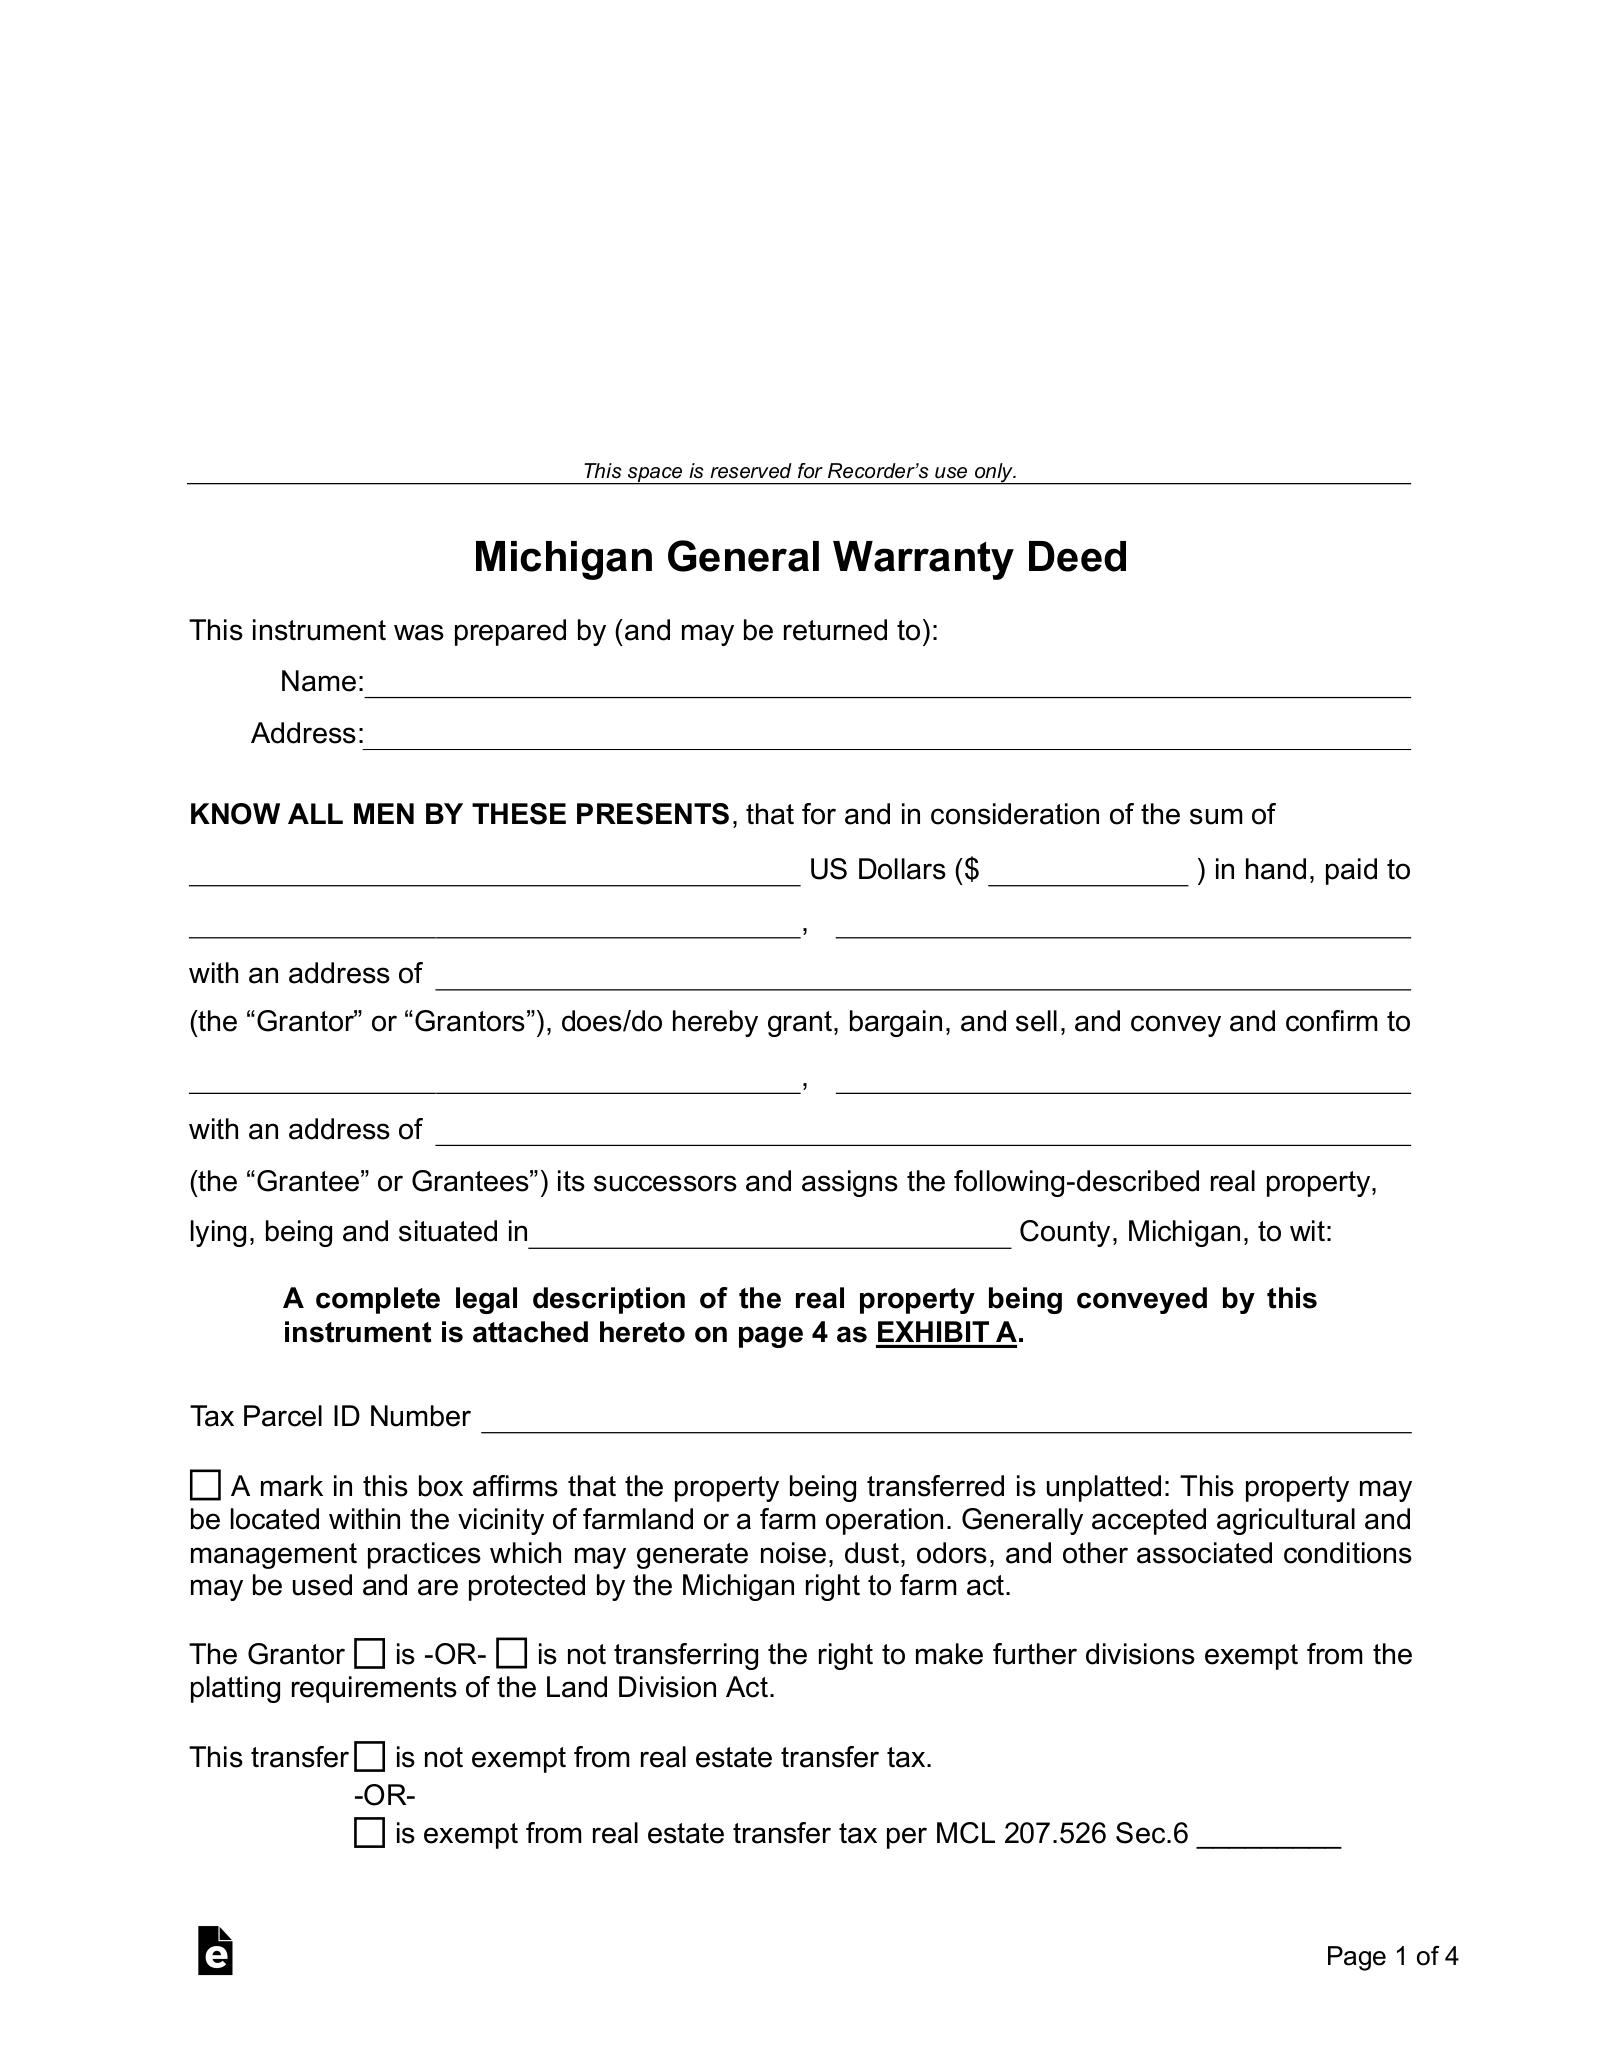 Michigan General Warranty Deed Form